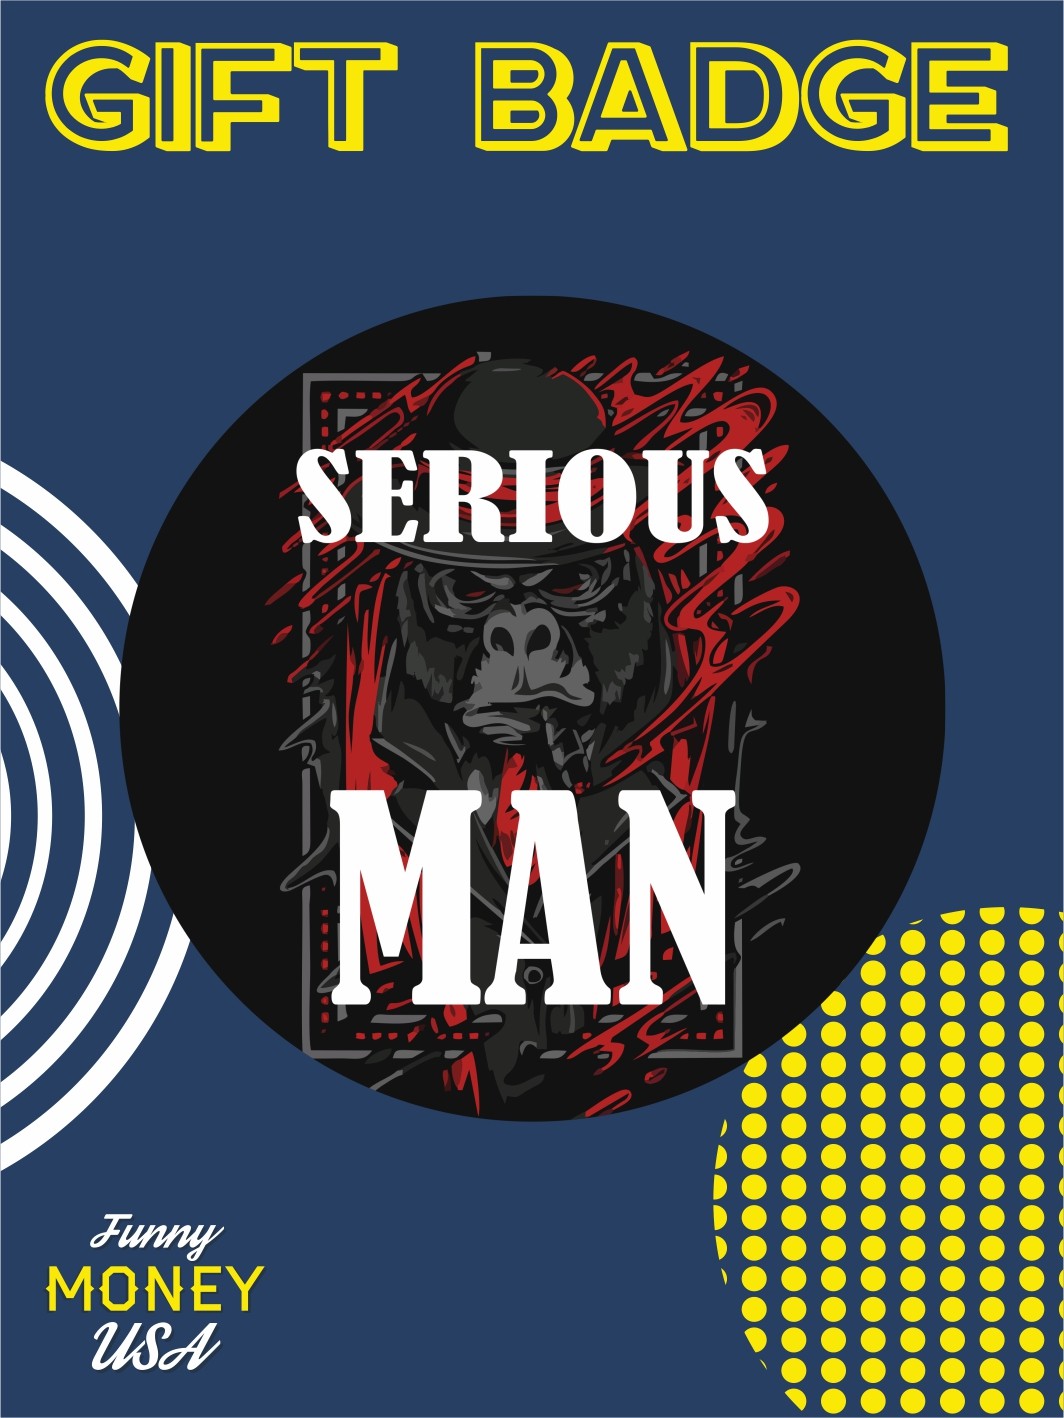 Gift badges "Serious man"